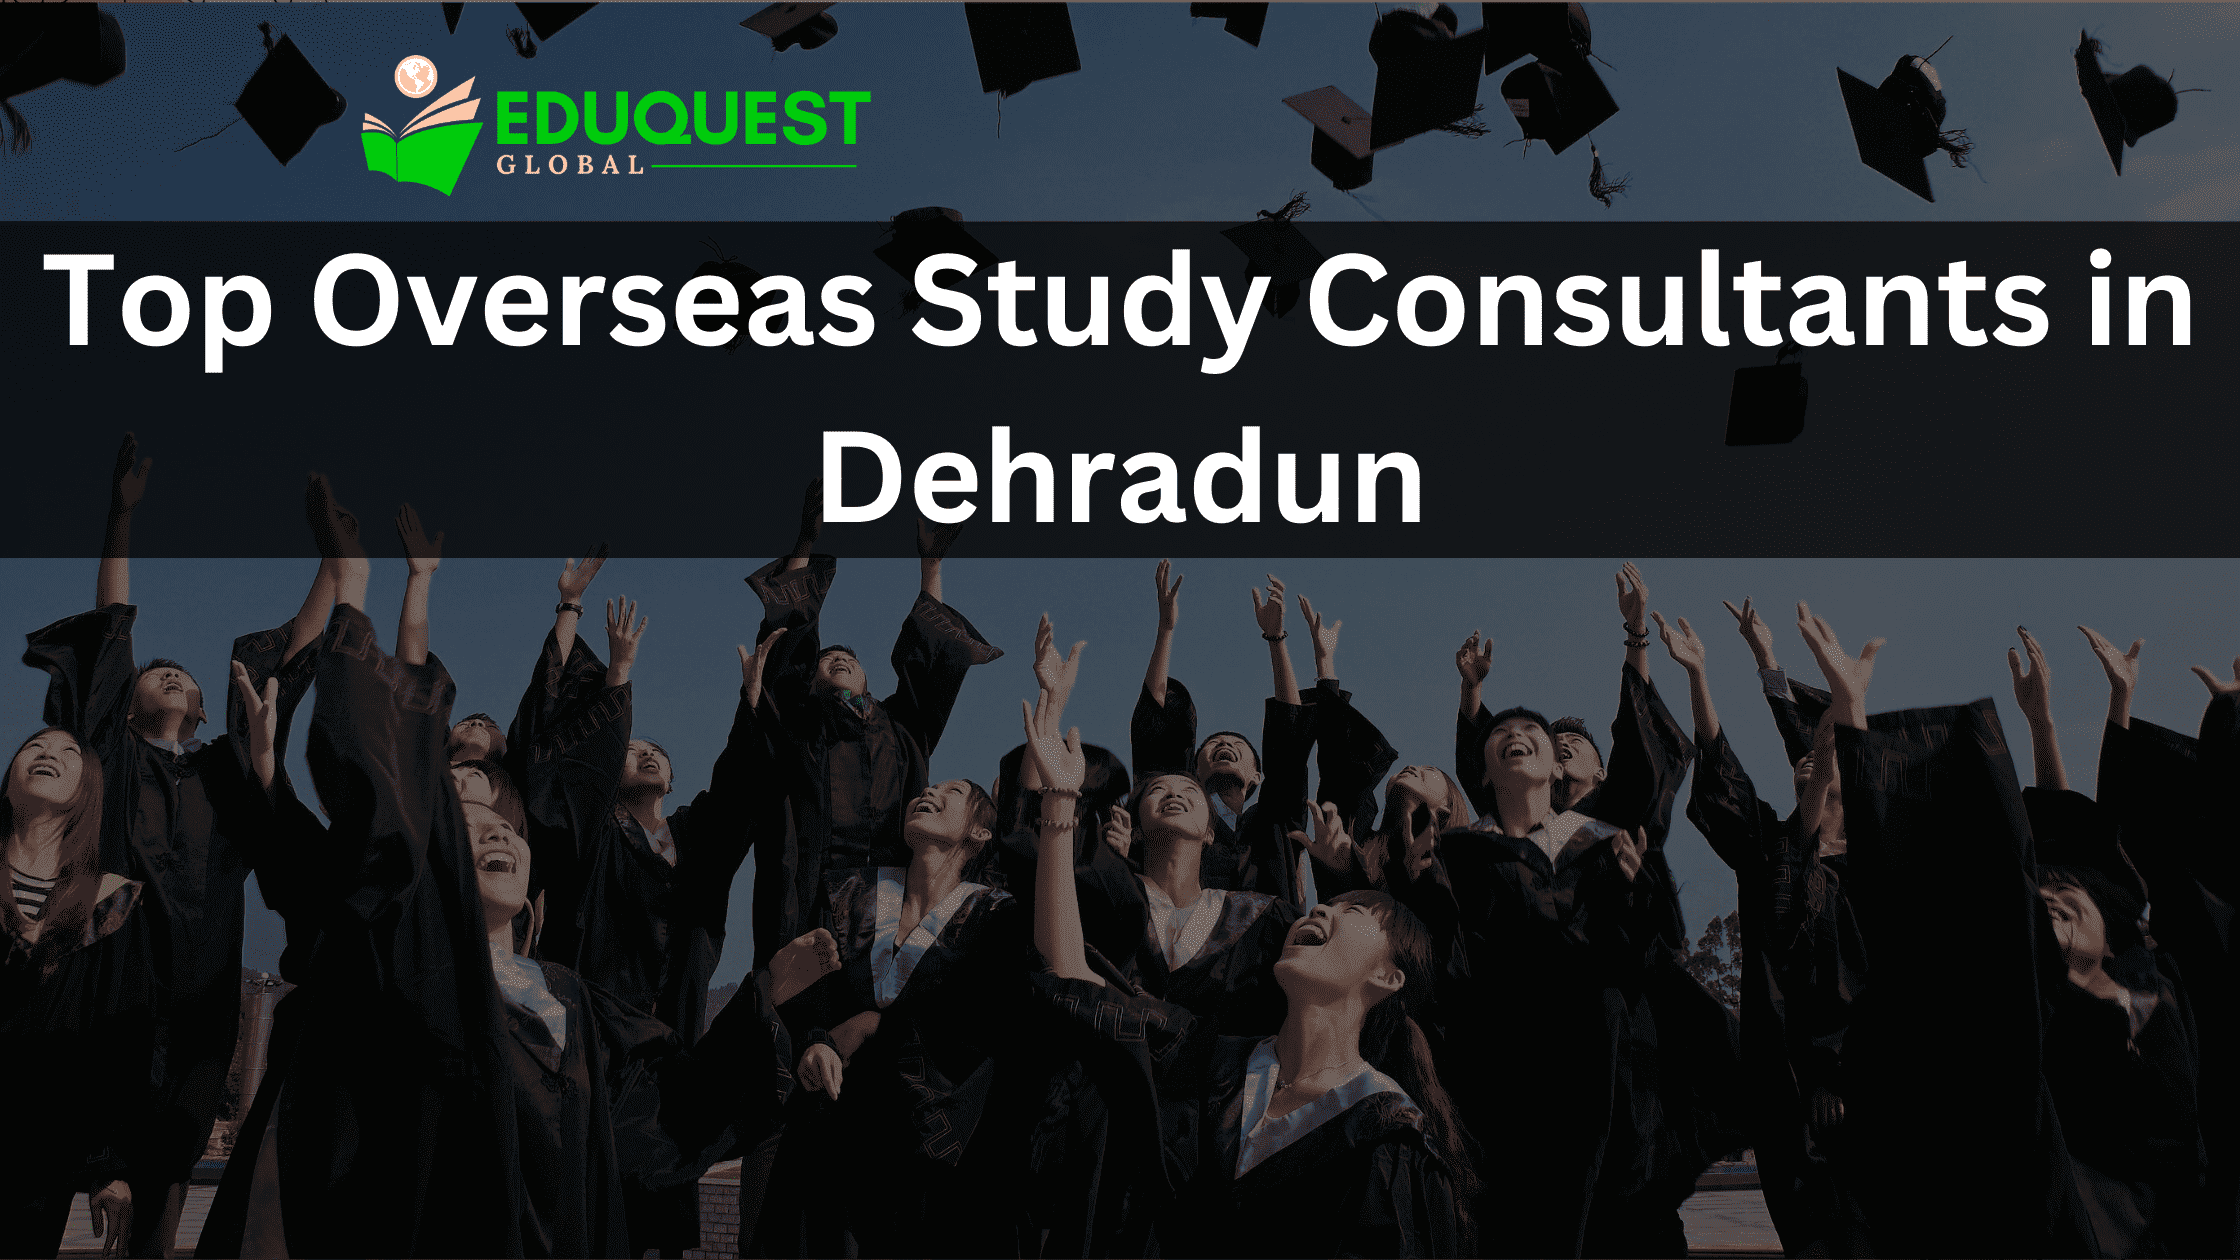 Dehradun's Number One Overseas Study Consultants - Dehradun Tutoring, Lessons